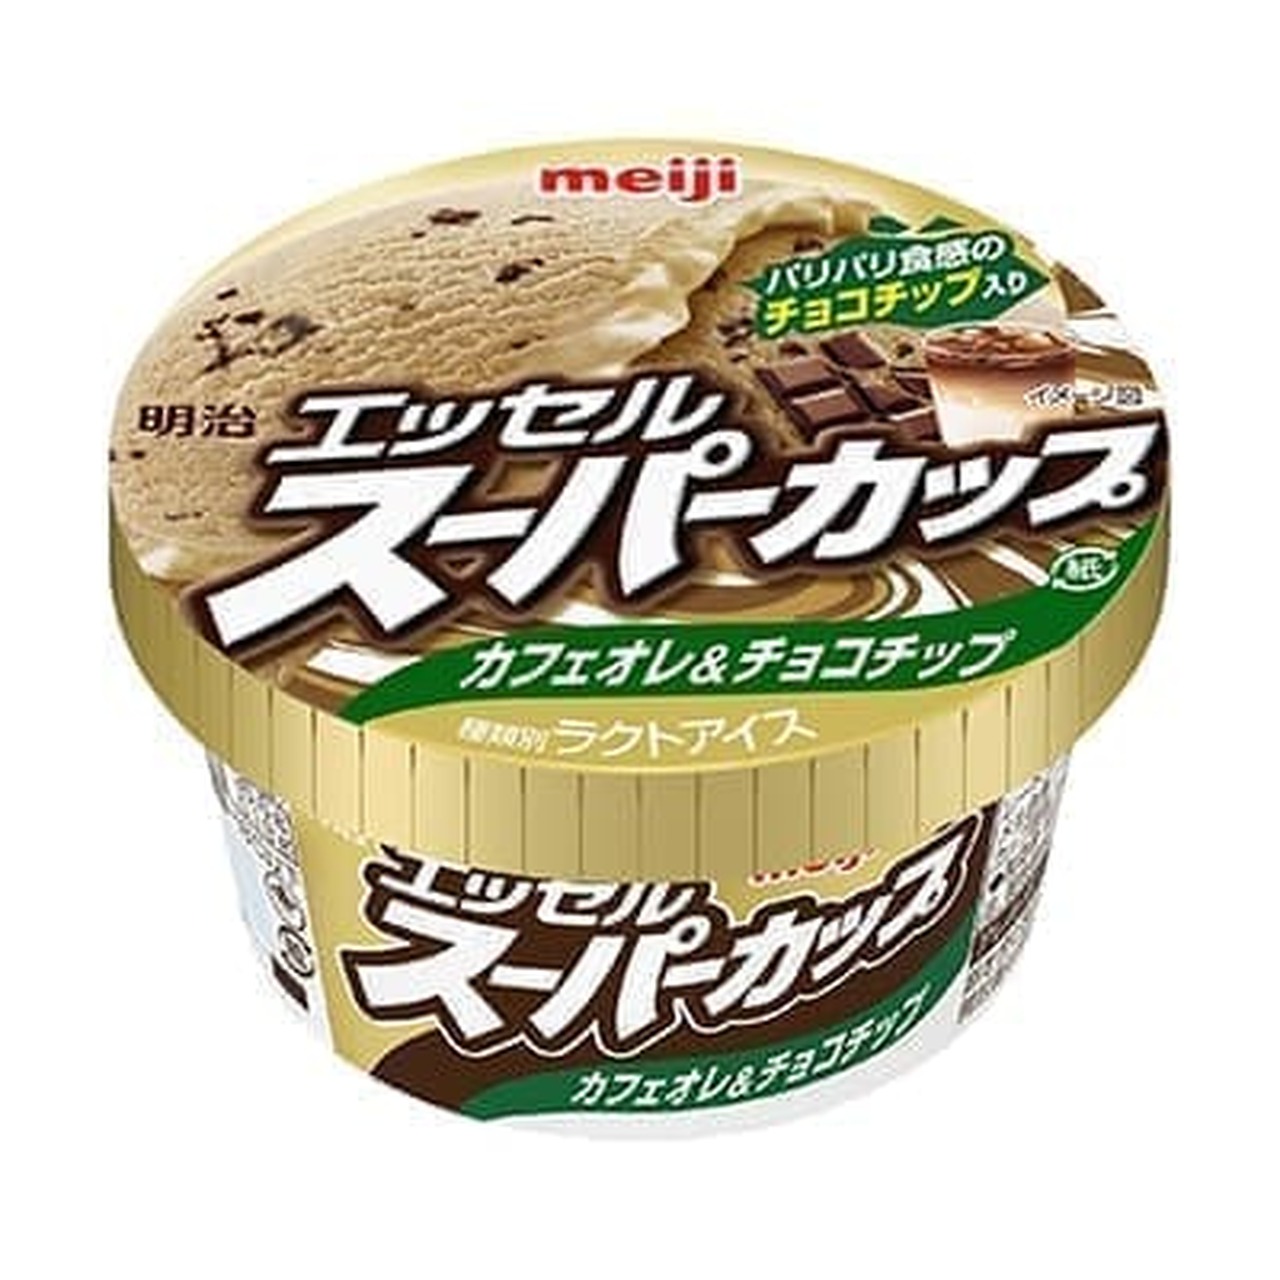 Meiji Essel Super Cup Cafe au lait & chocolate chips